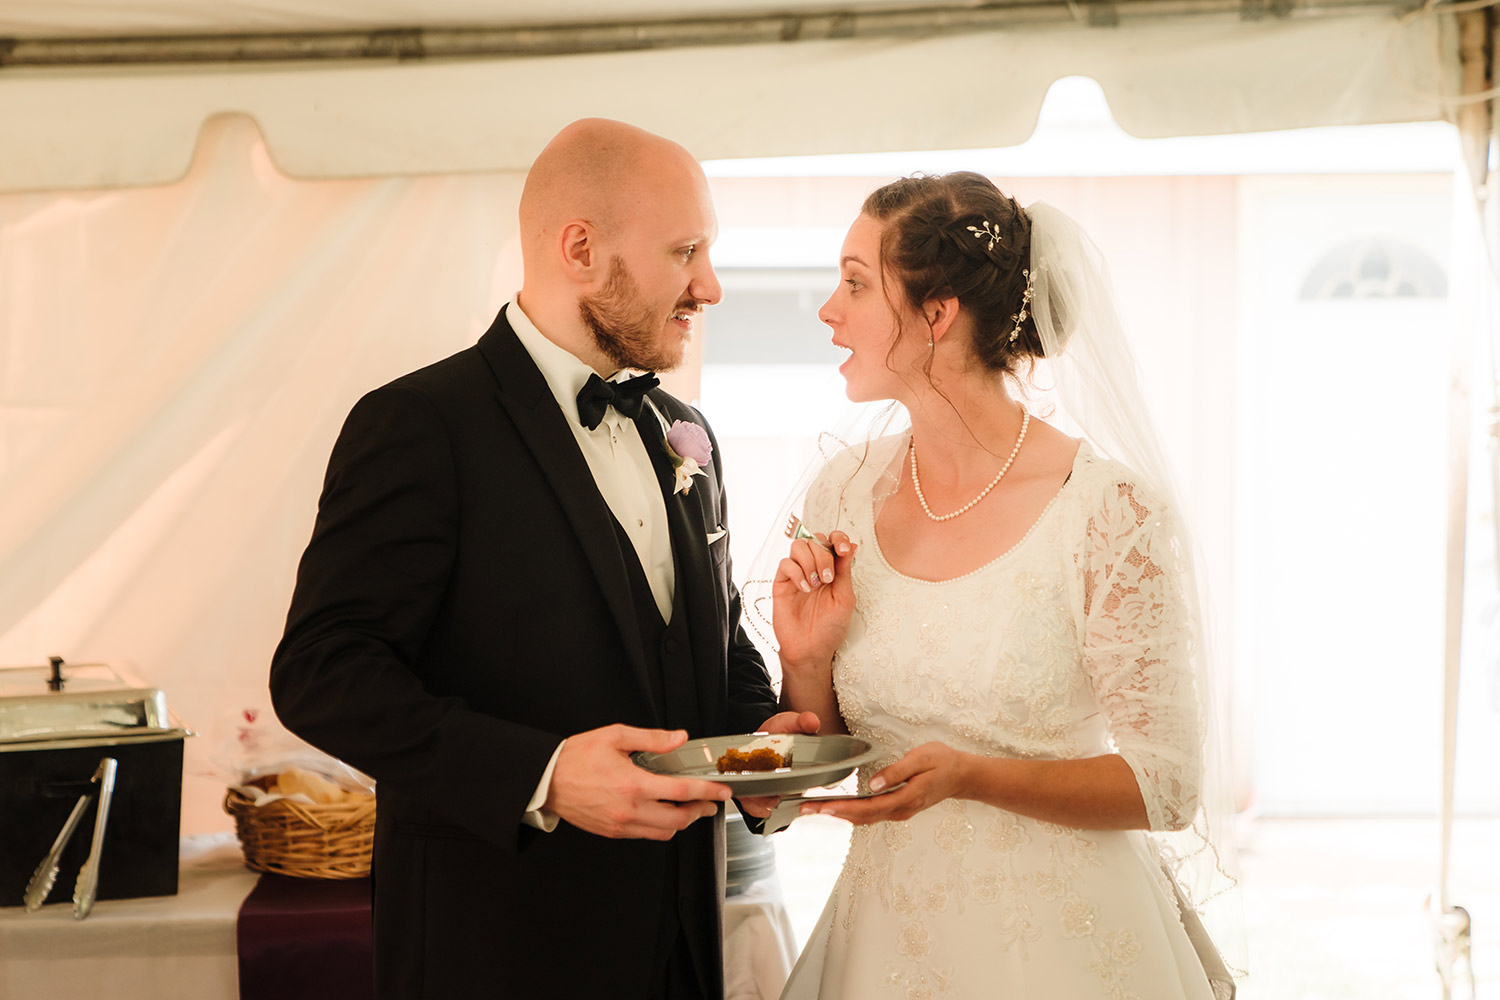 Bride and groom sharing pie at backyard wedding reception